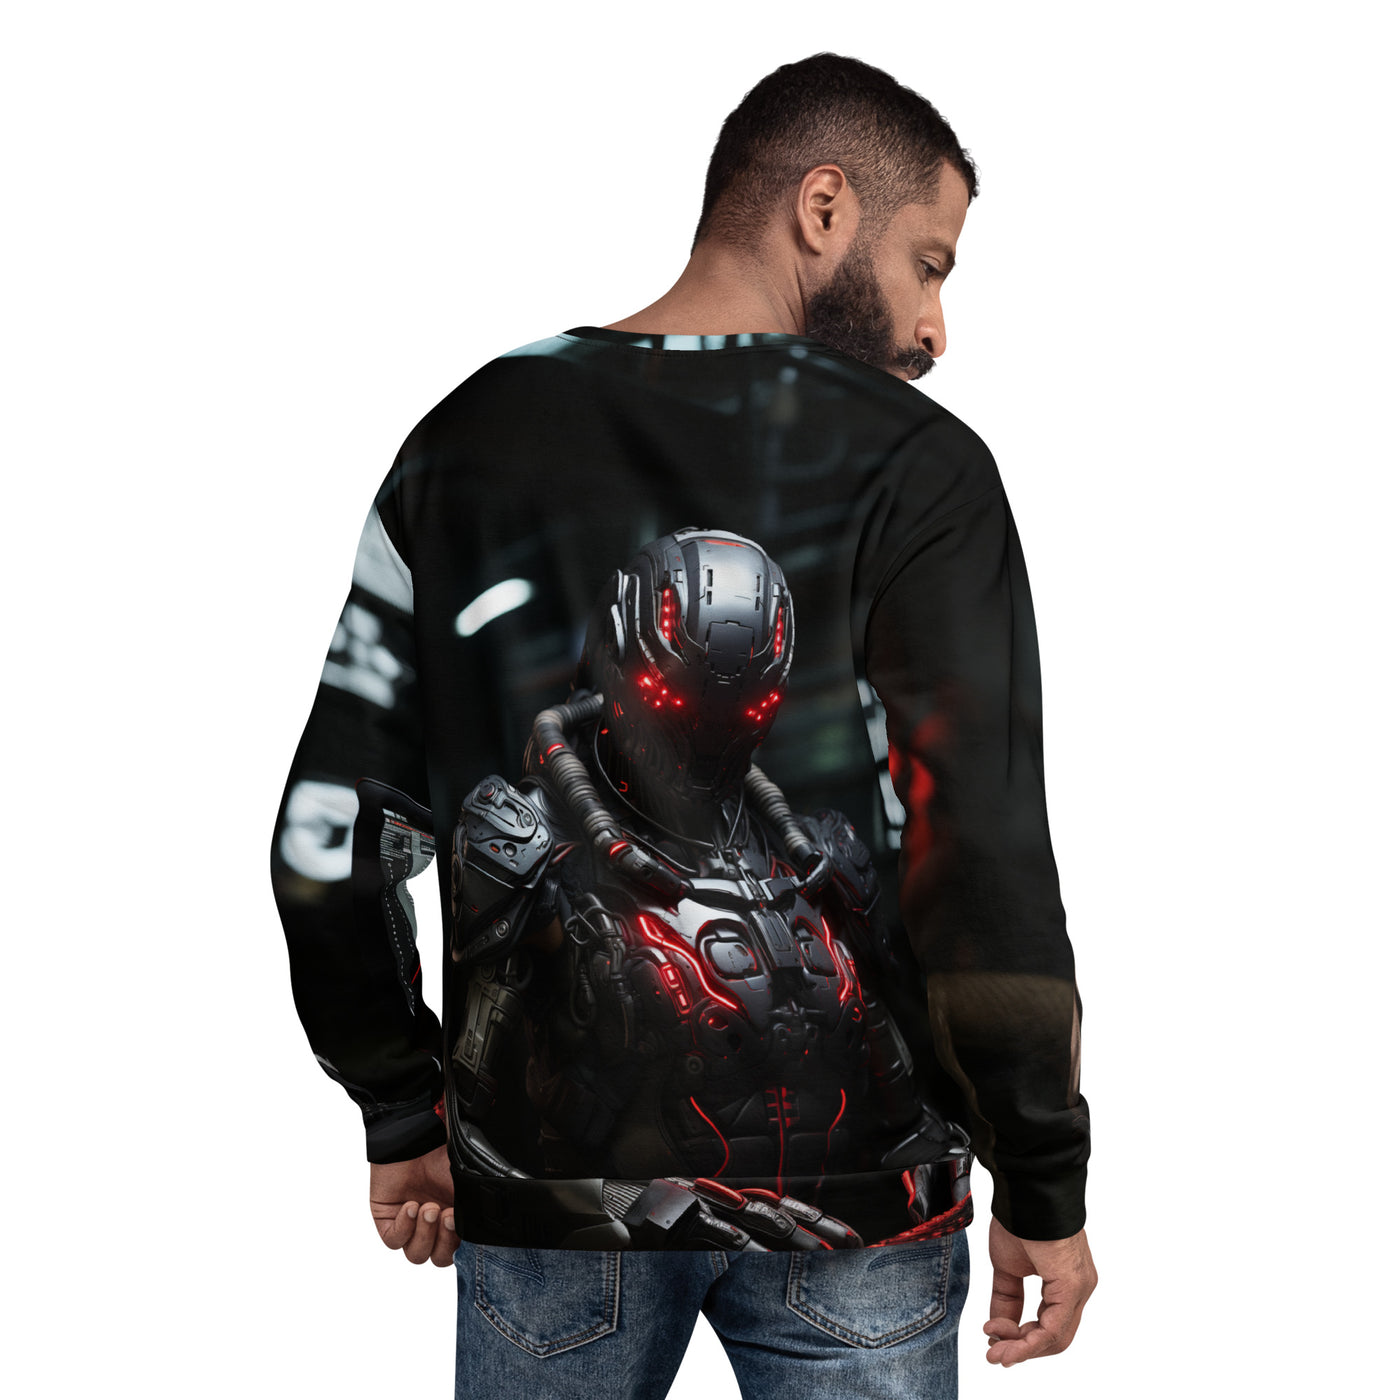 CyberArms Warrior v3 - Unisex Sweatshirt